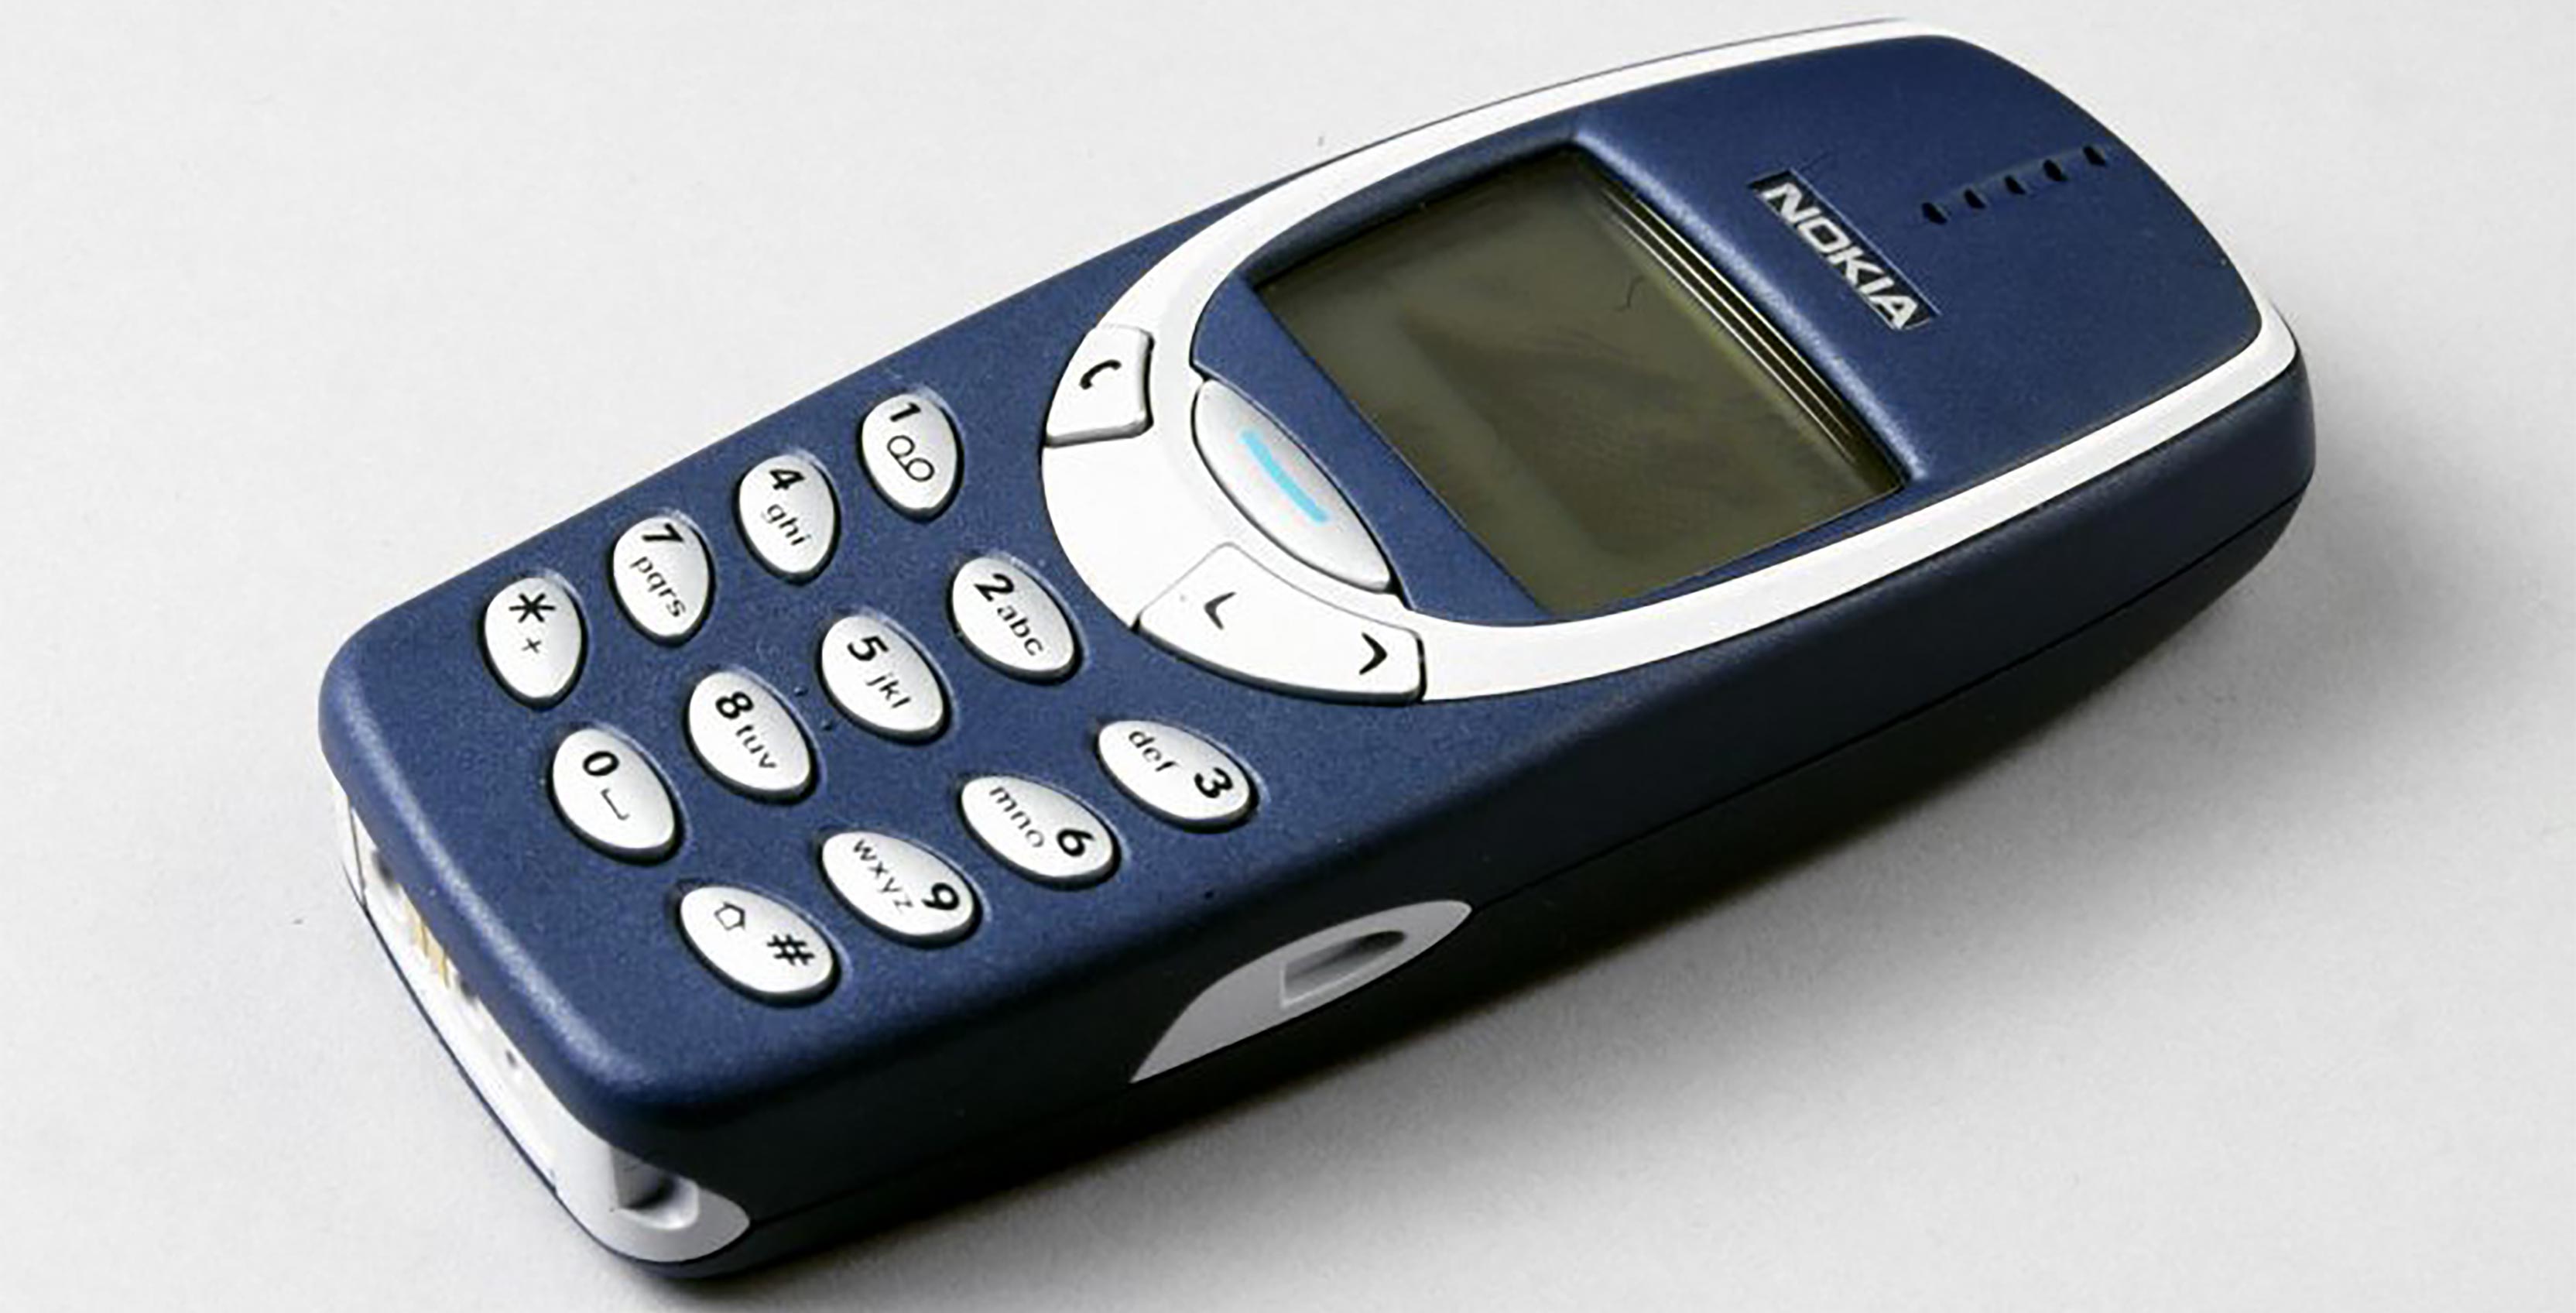 Nokia old's 3310